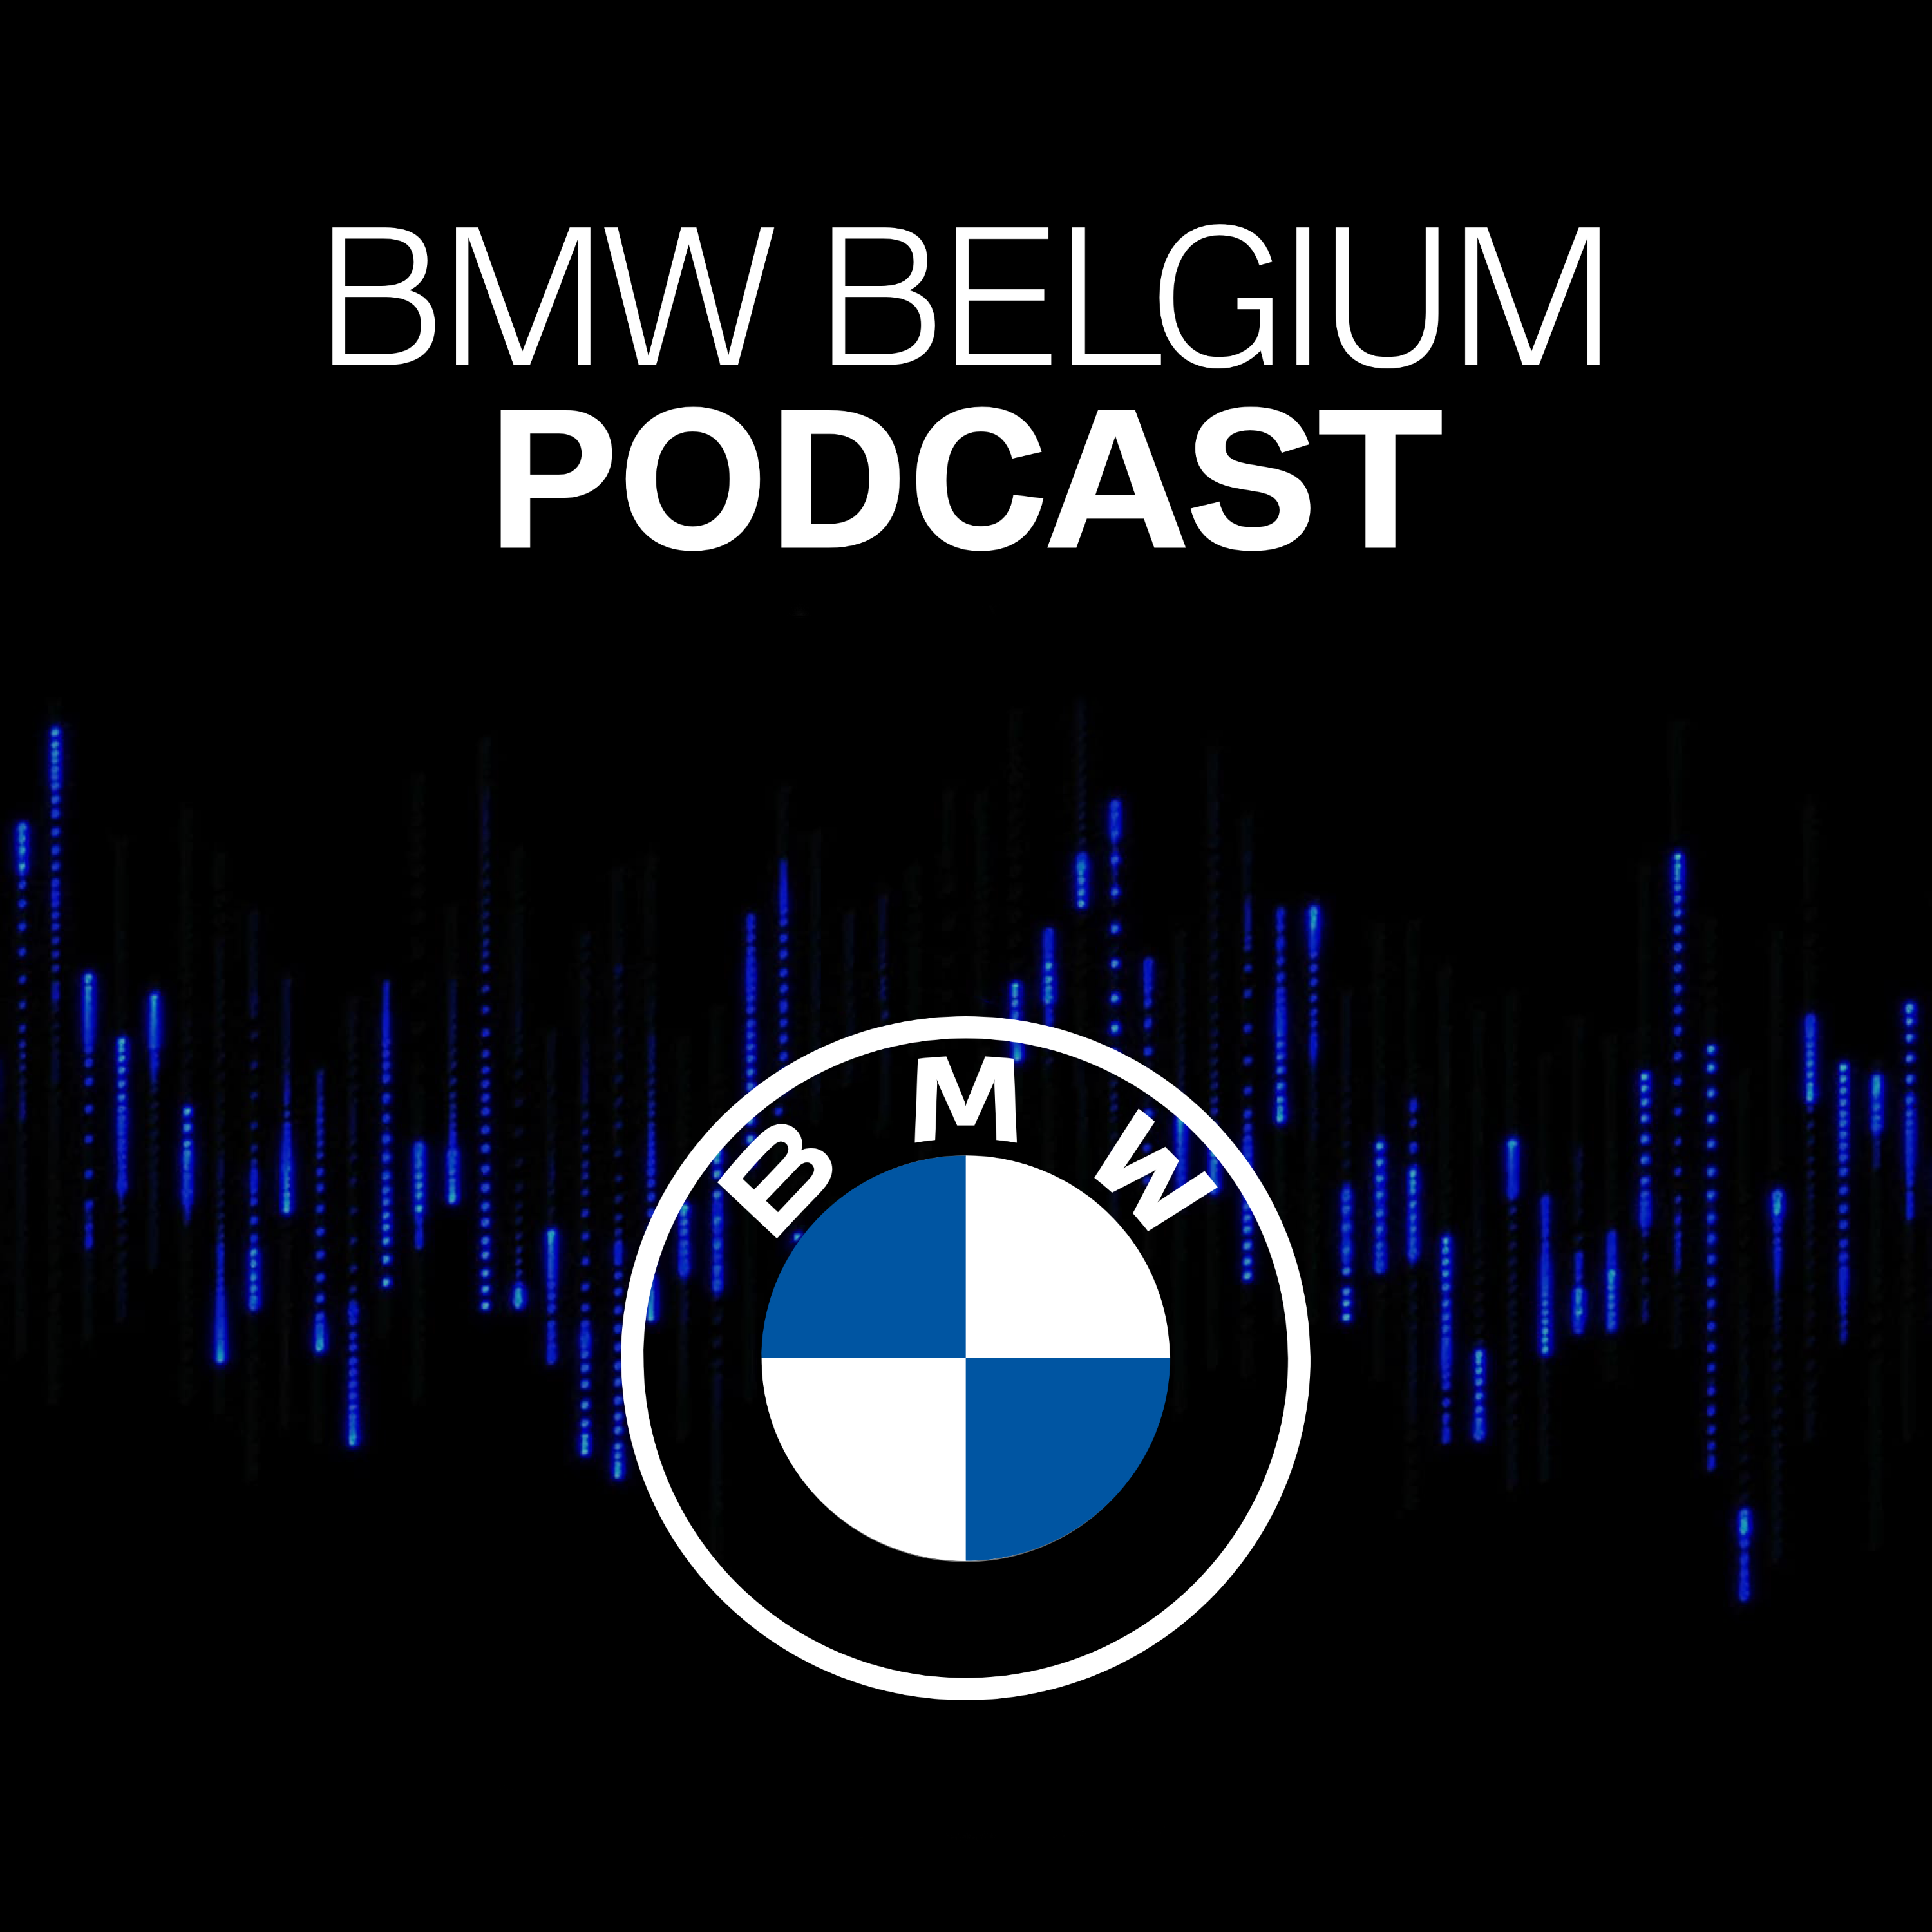 BMW Belgium Podcast